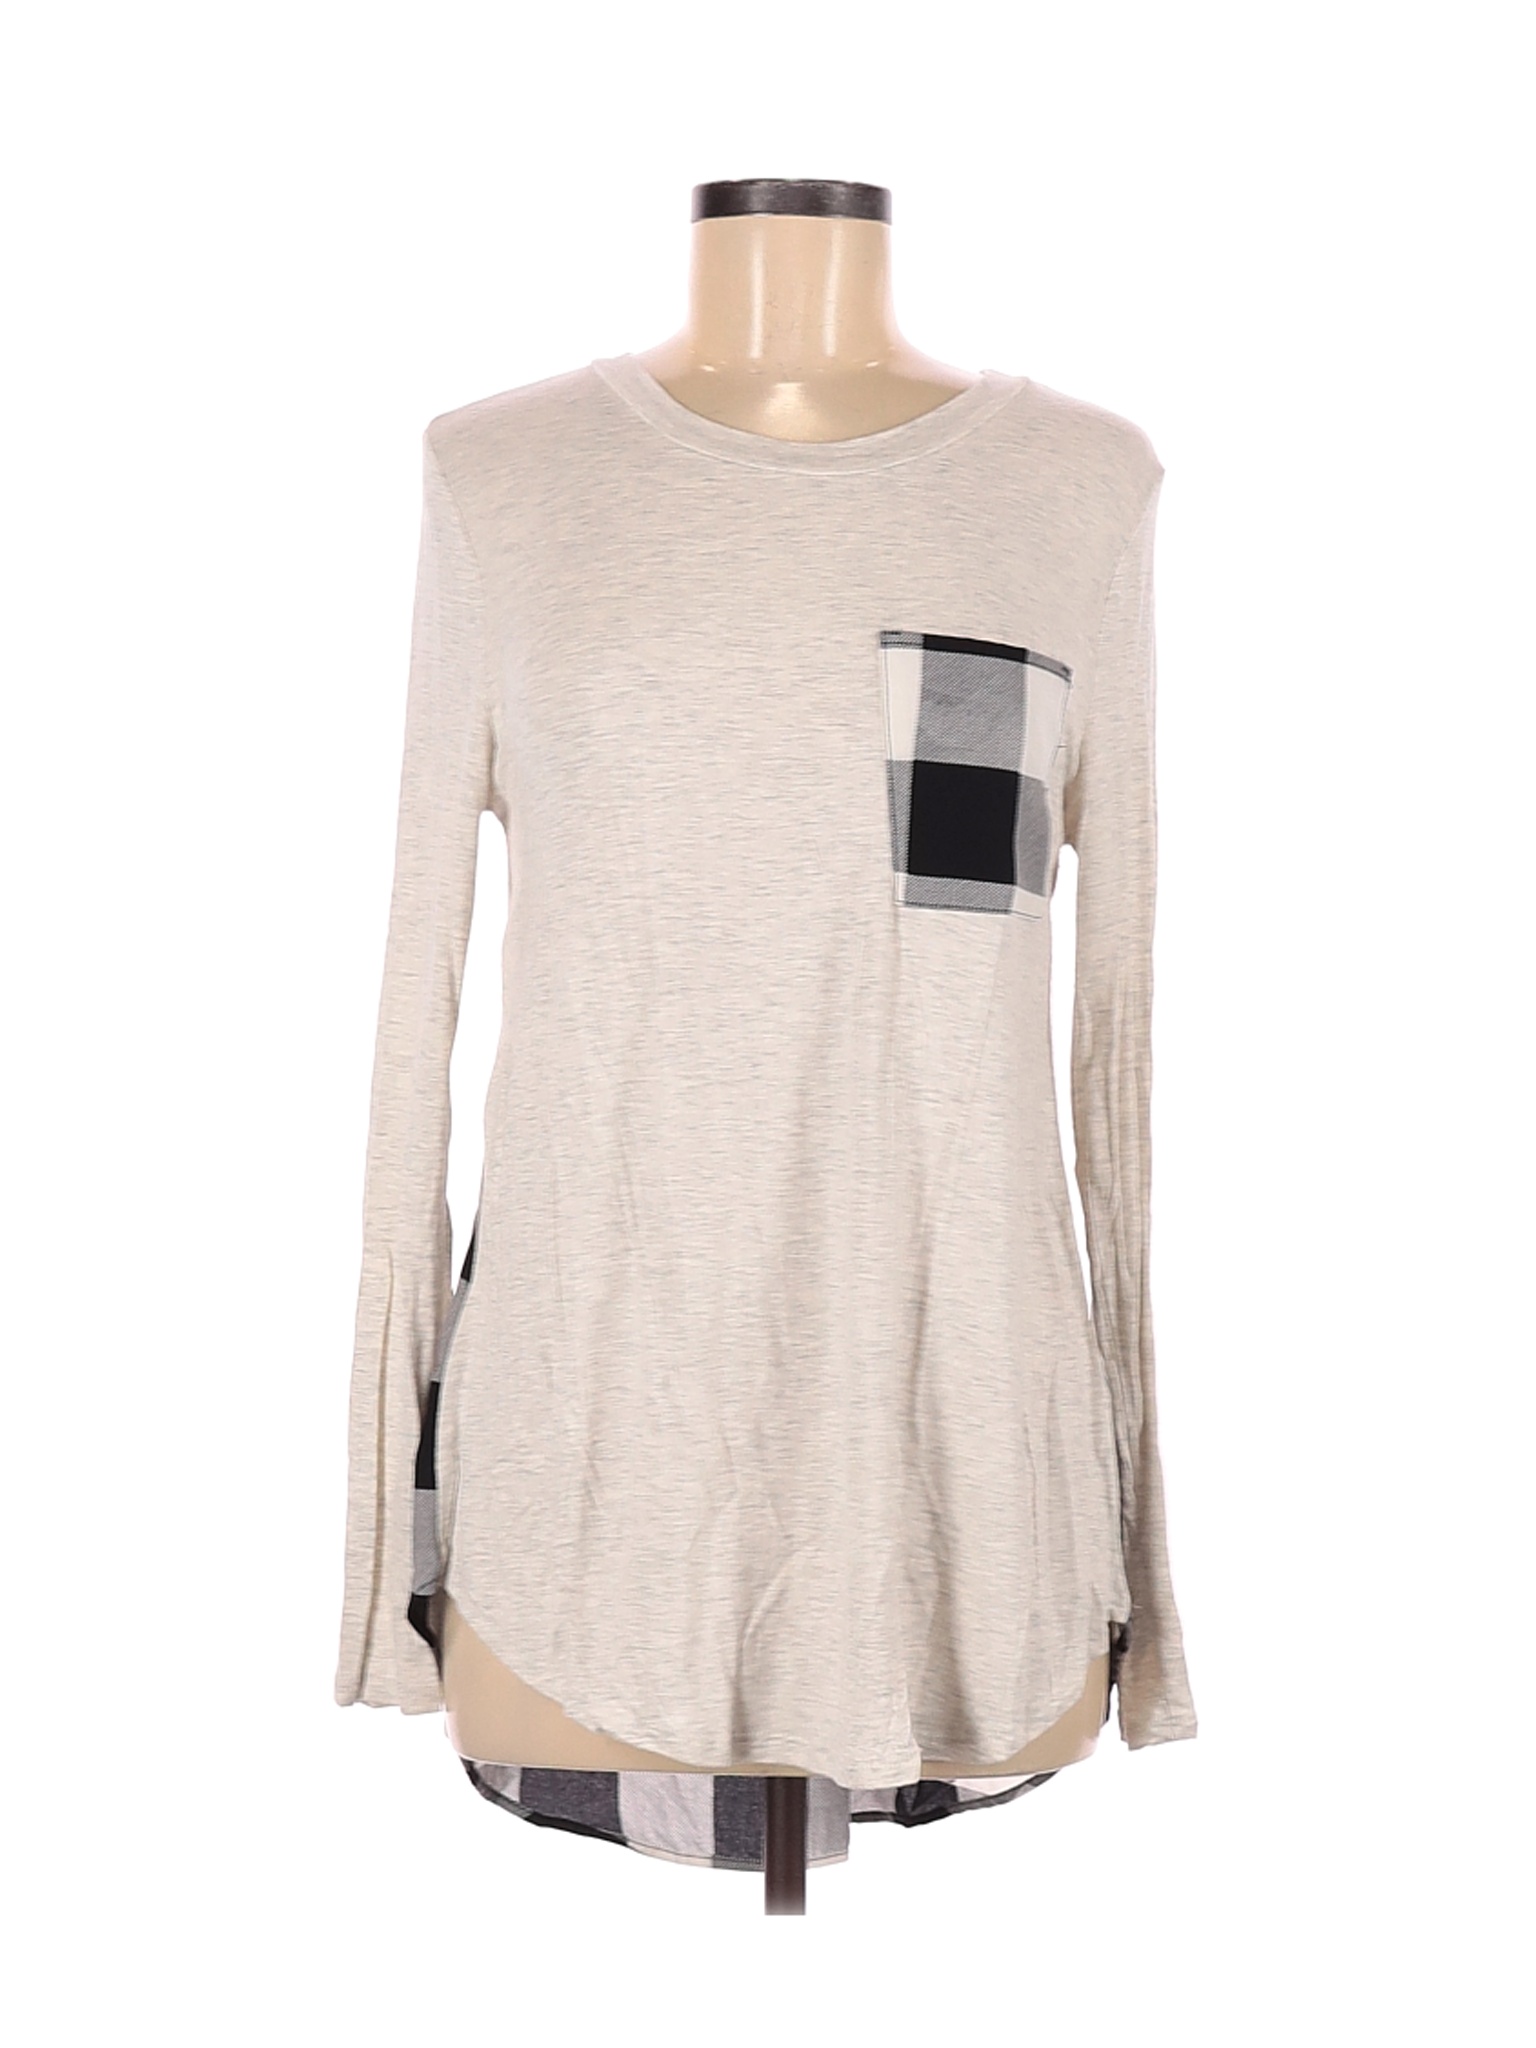 12pm by Mon Ami Women Brown Long Sleeve T-Shirt M | eBay